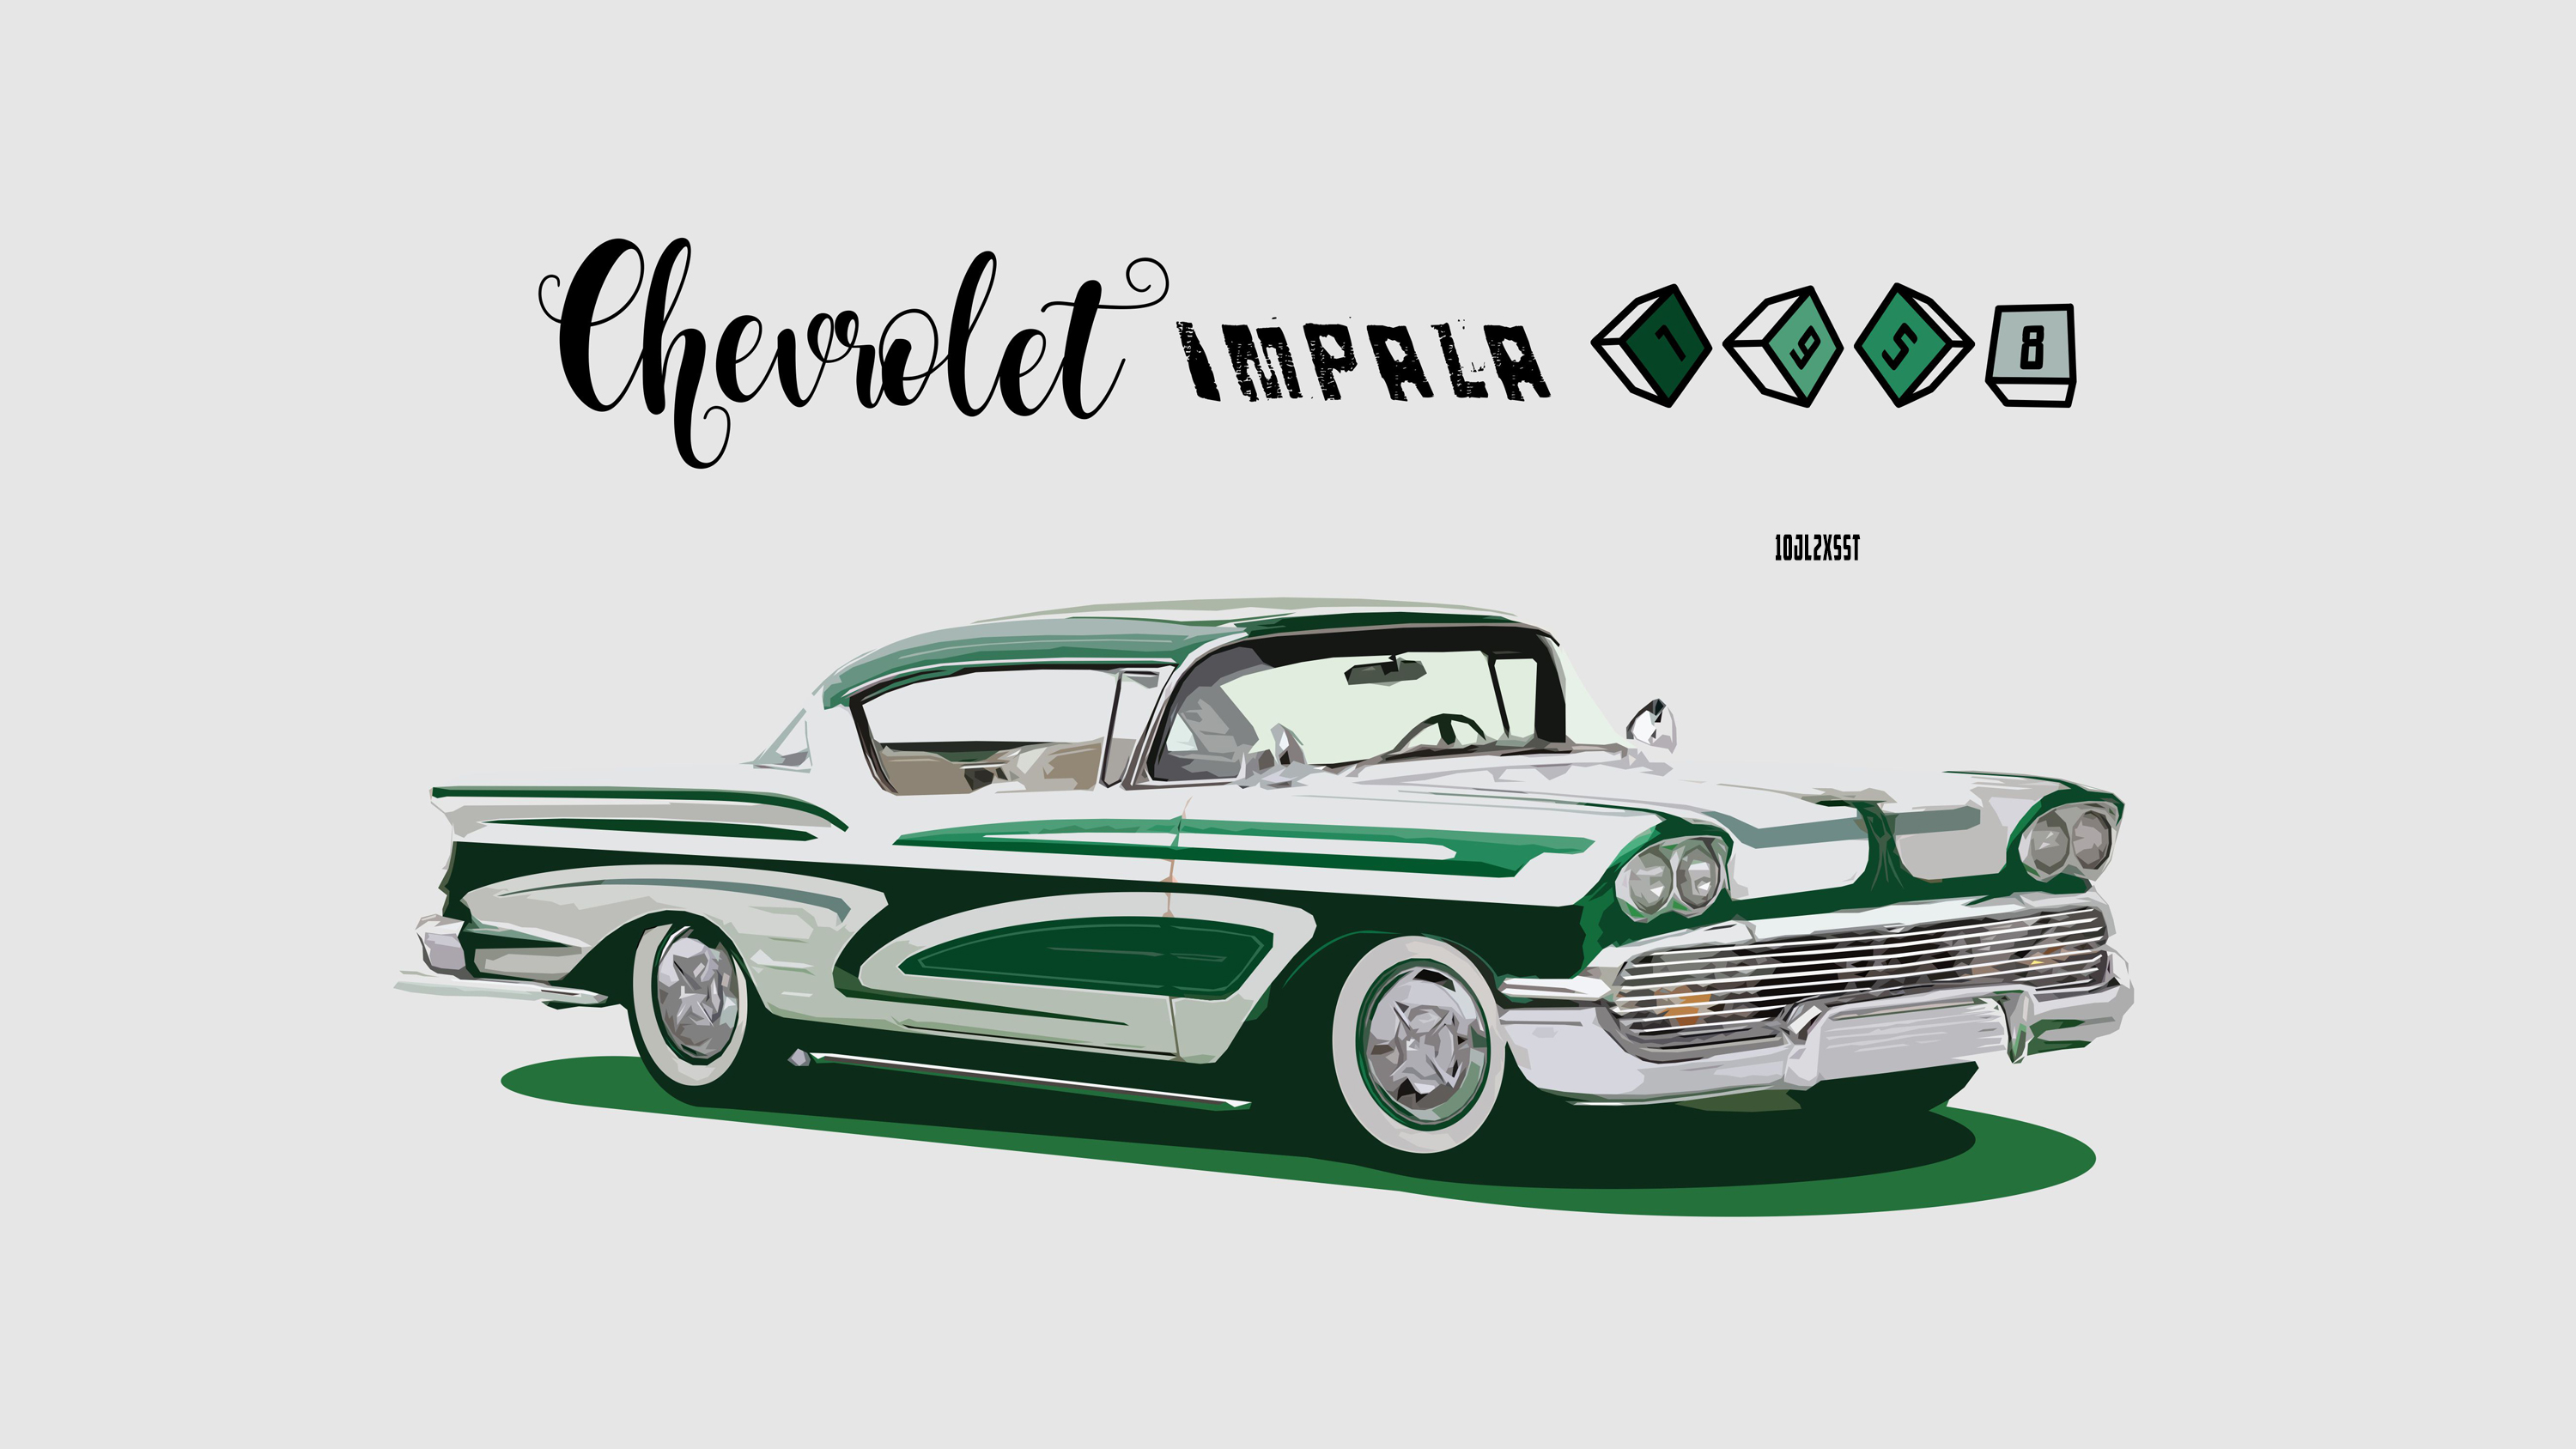 vehicles, chevrolet impala, car, chevrolet, classic car, green car, vintage